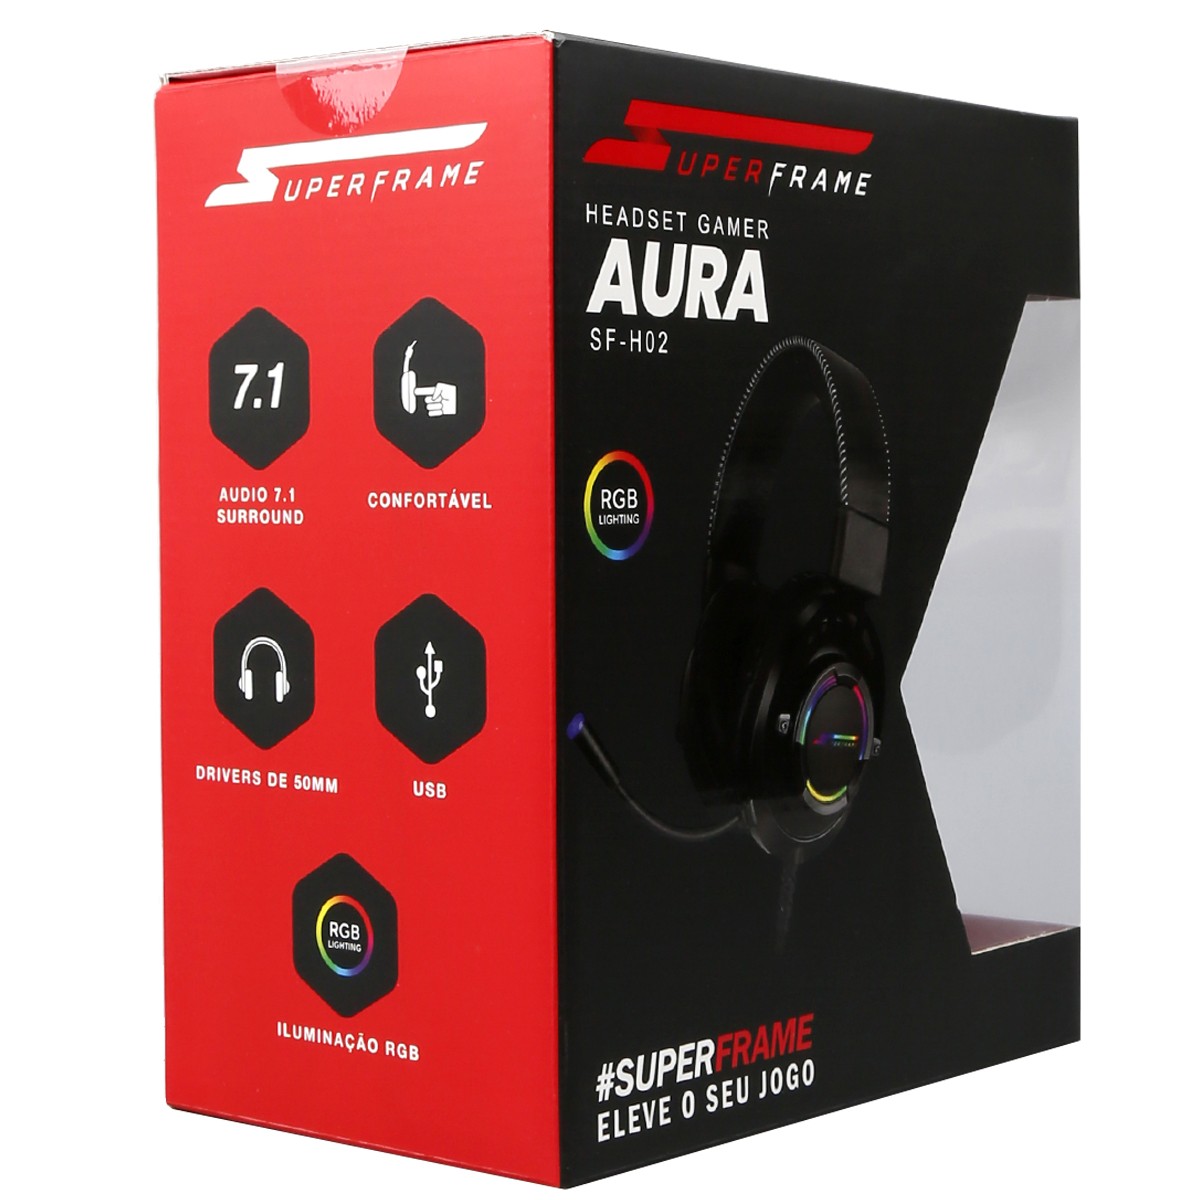 Headset Gamer SuperFrame AURA, 7.1 Surround, RGB, USB, Black